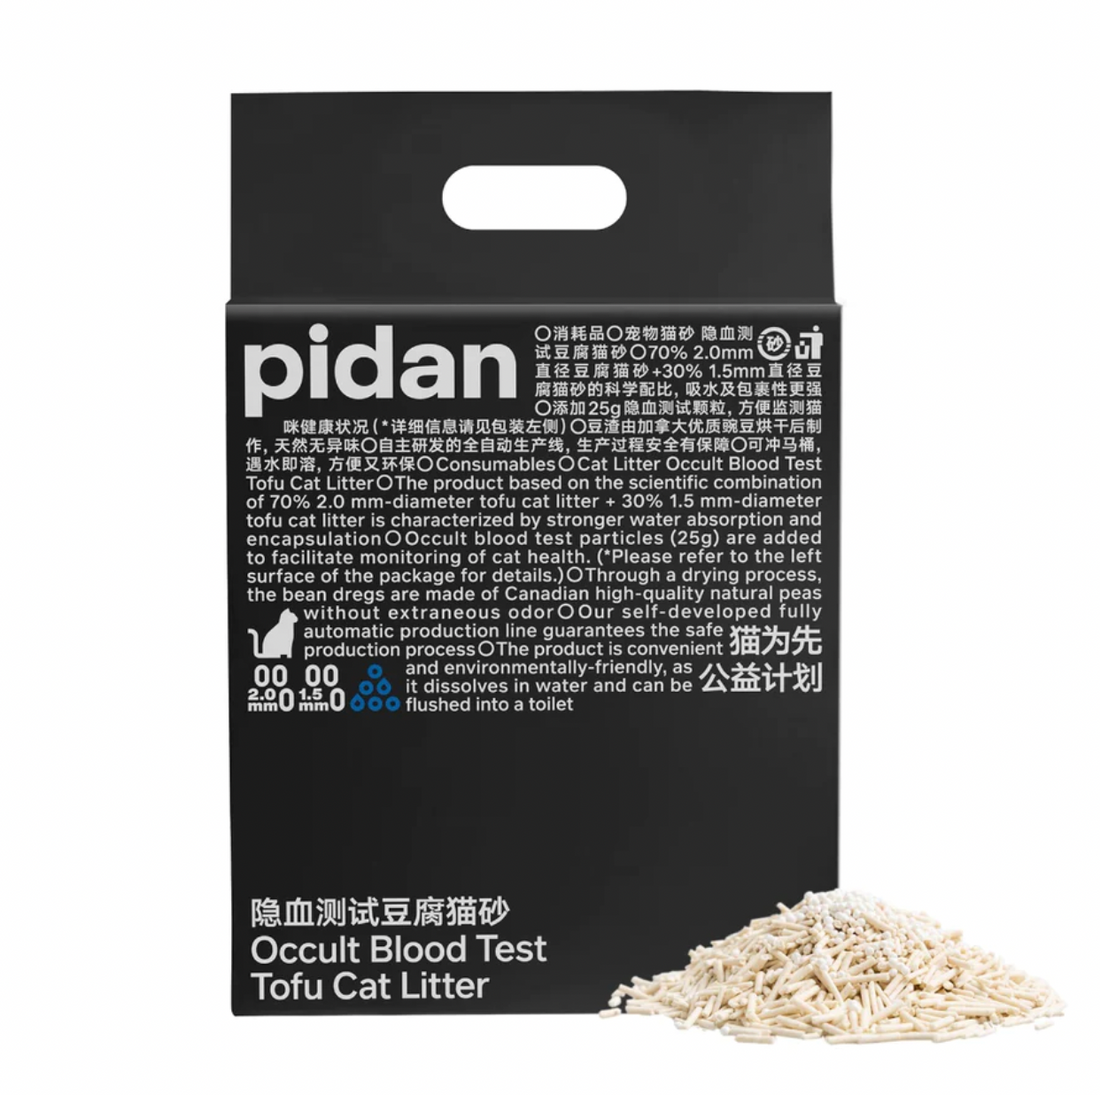 【PIDAN】Original Tofu Cat Litter with Occult Blood Test Particles 6 L